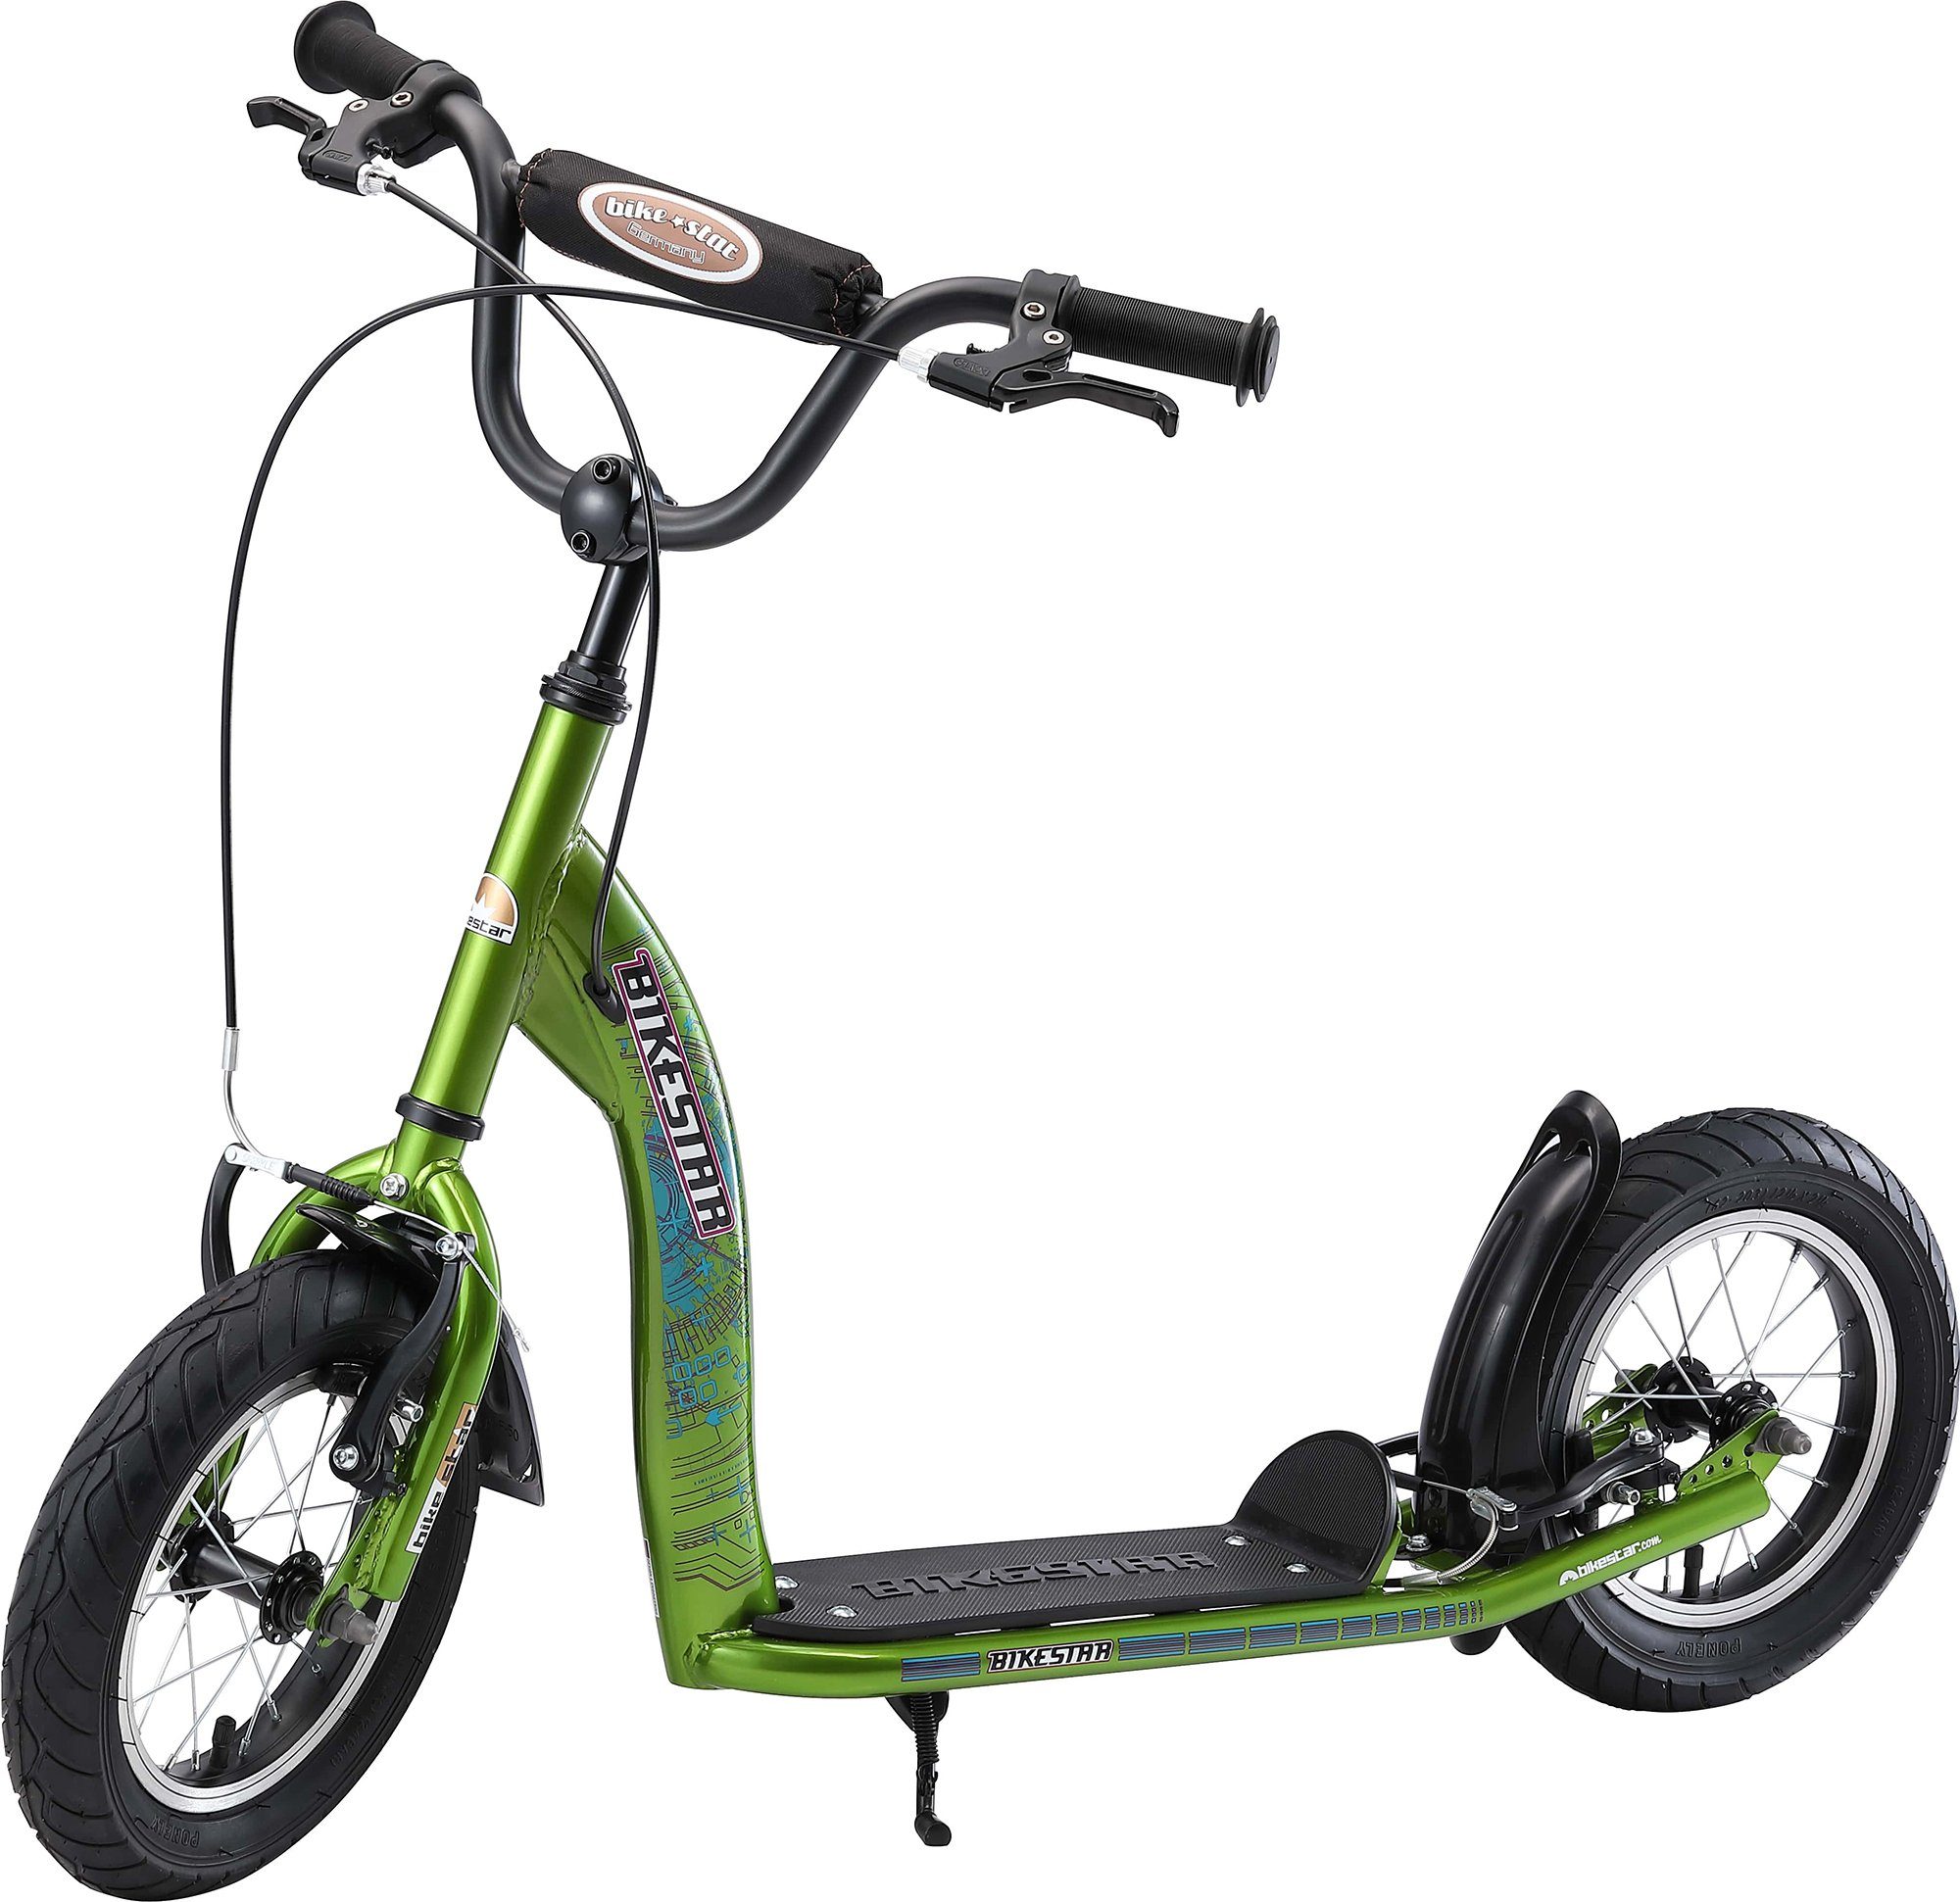 Star-Scooter Bikestar Scooter grün